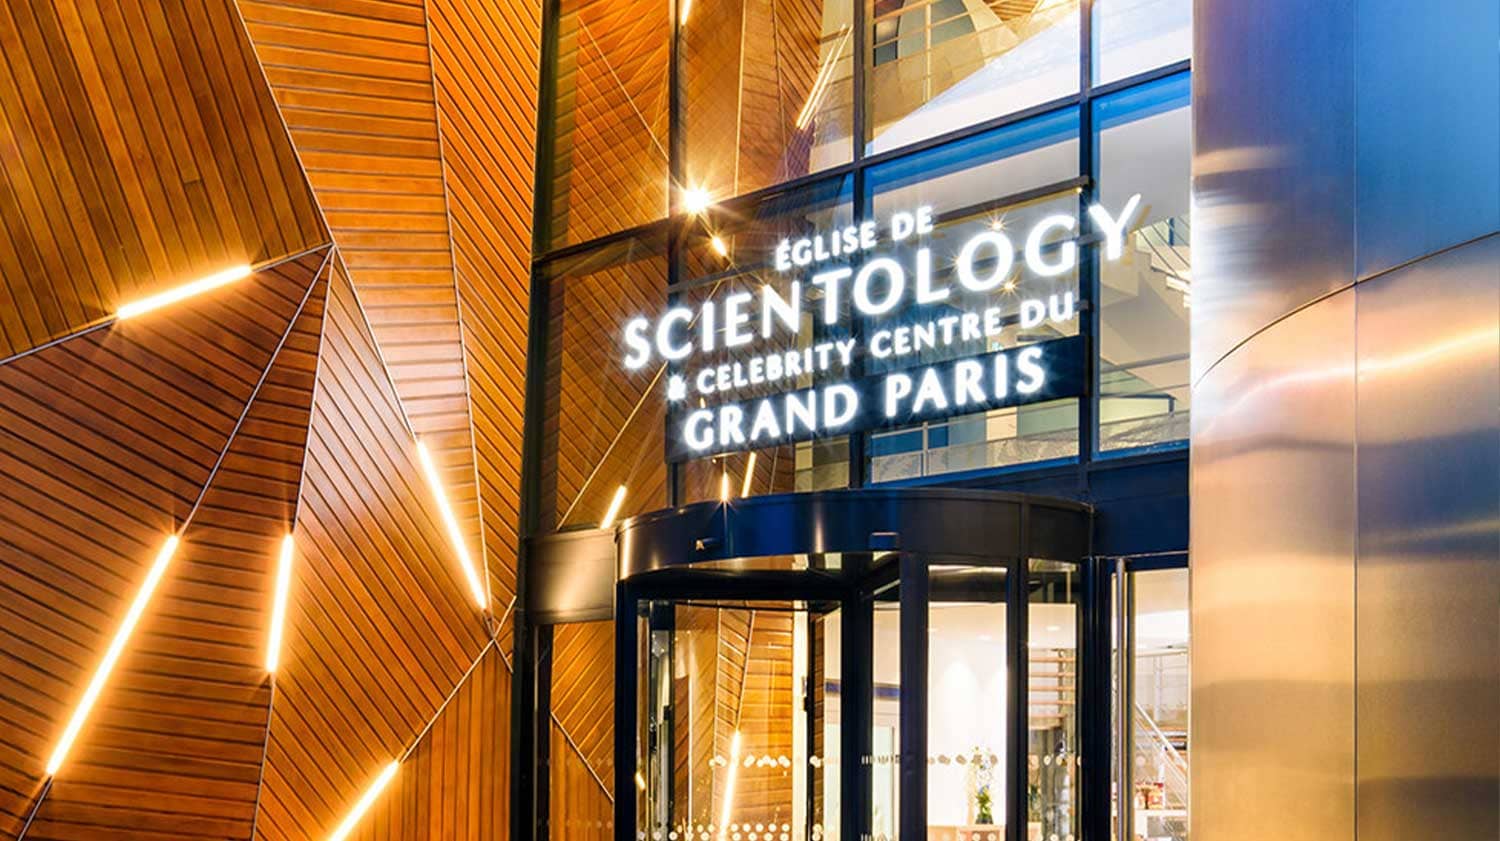 New Scientology building in Paris